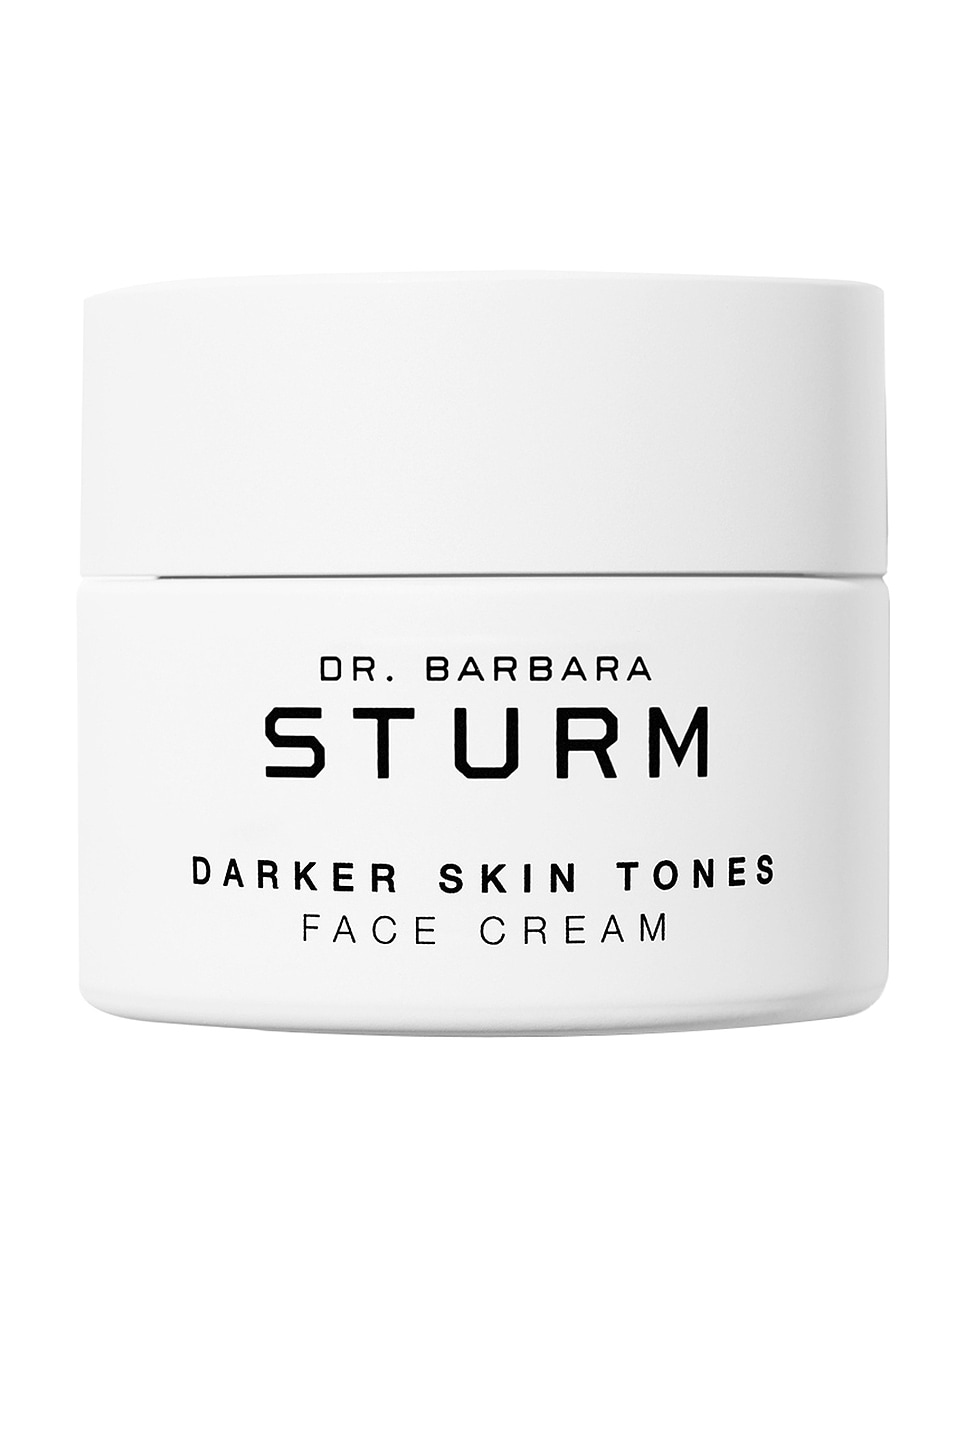 Darker Skin Tones Face Cream in Beauty: NA